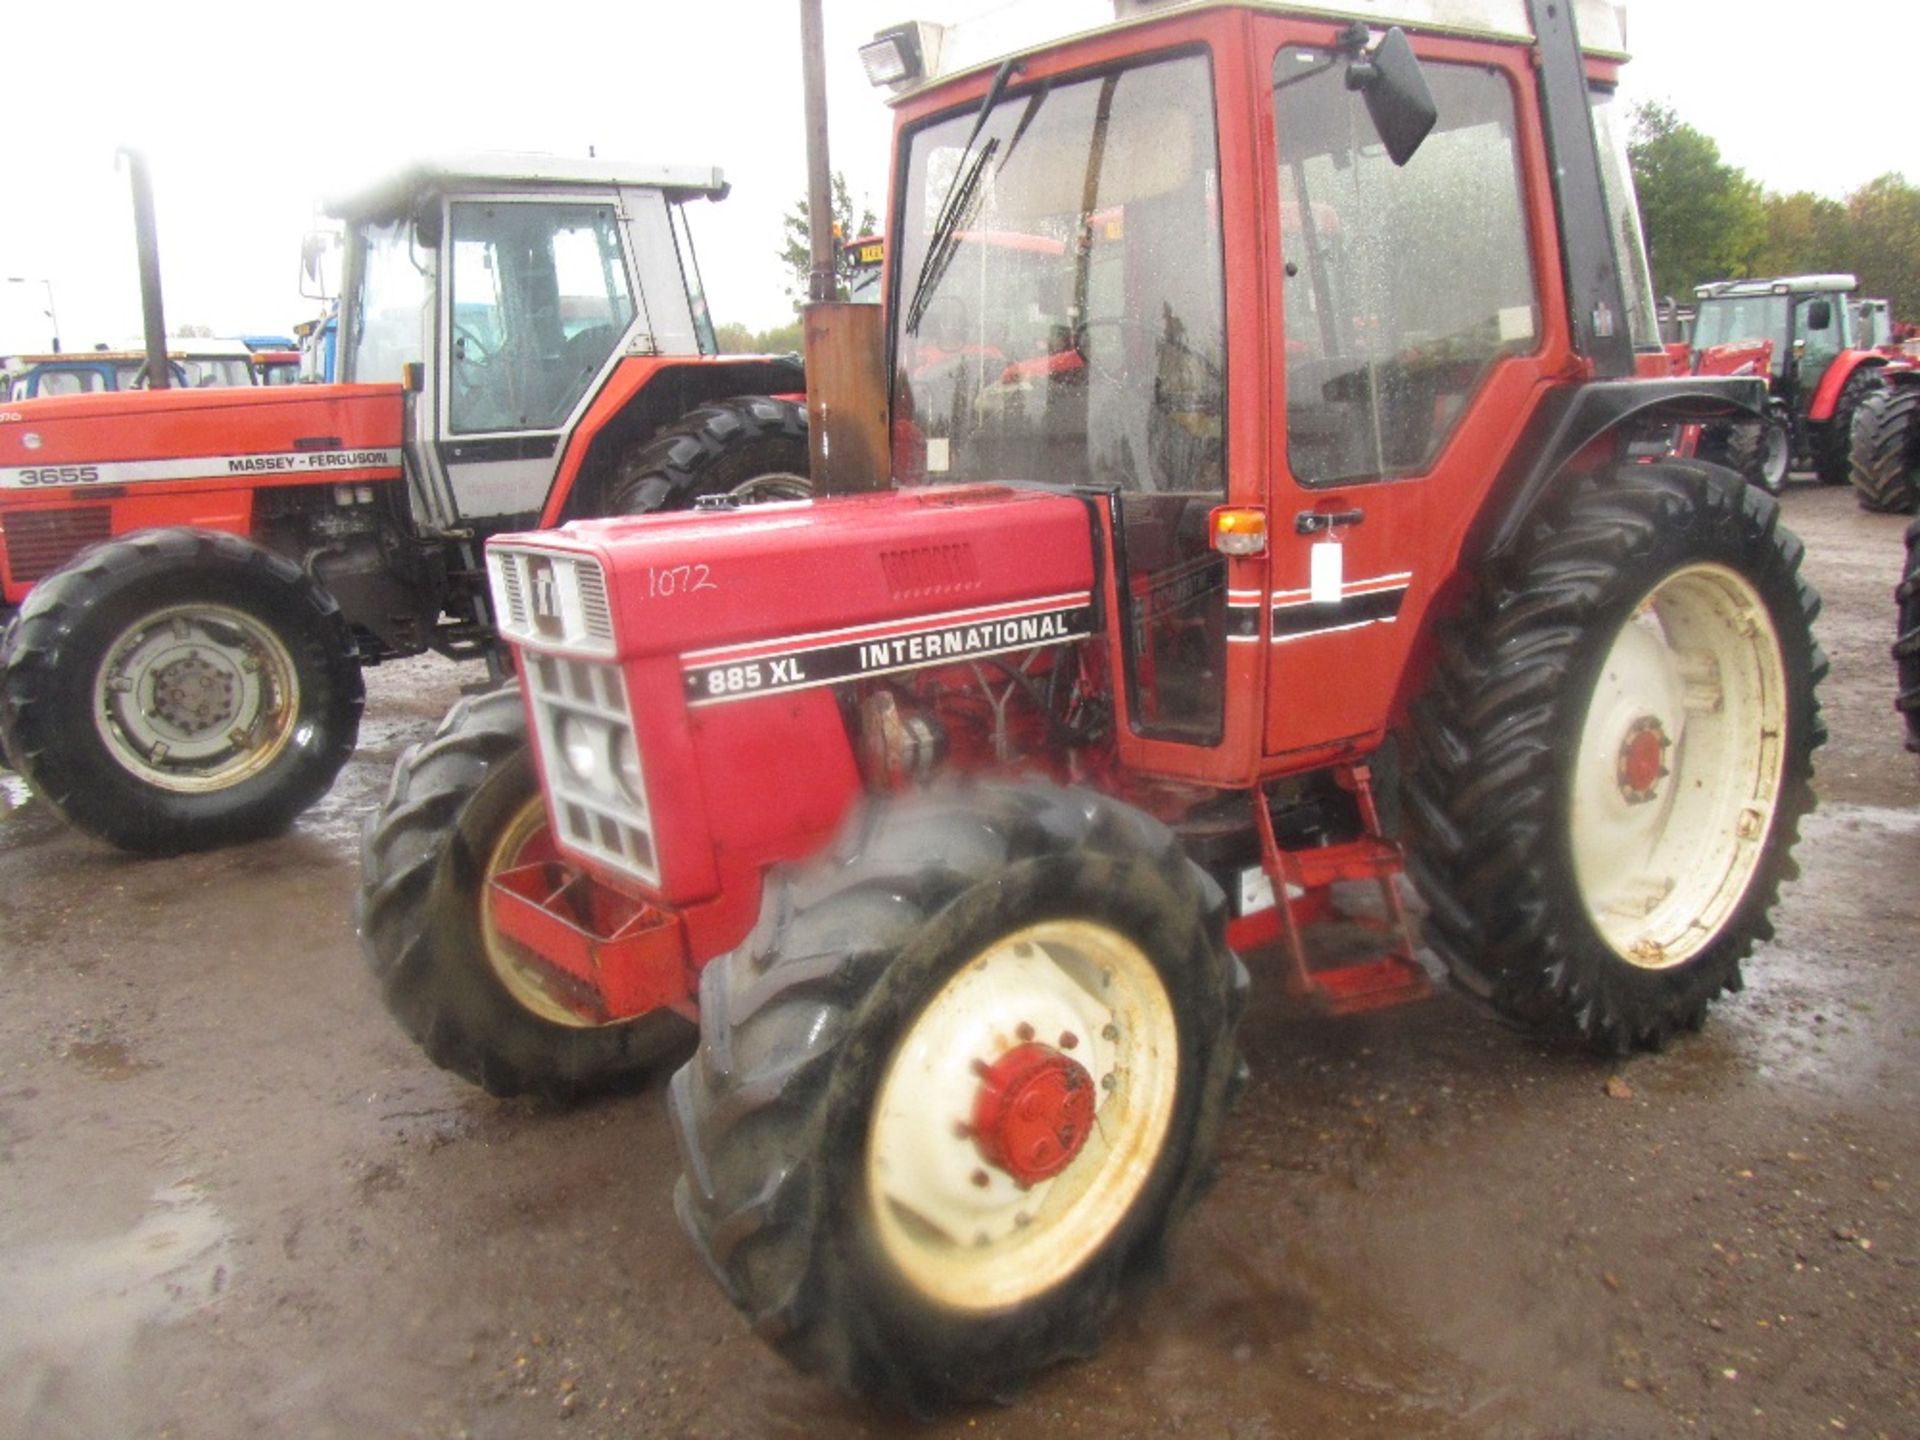 Case International 885 XL 4wd Tractor.